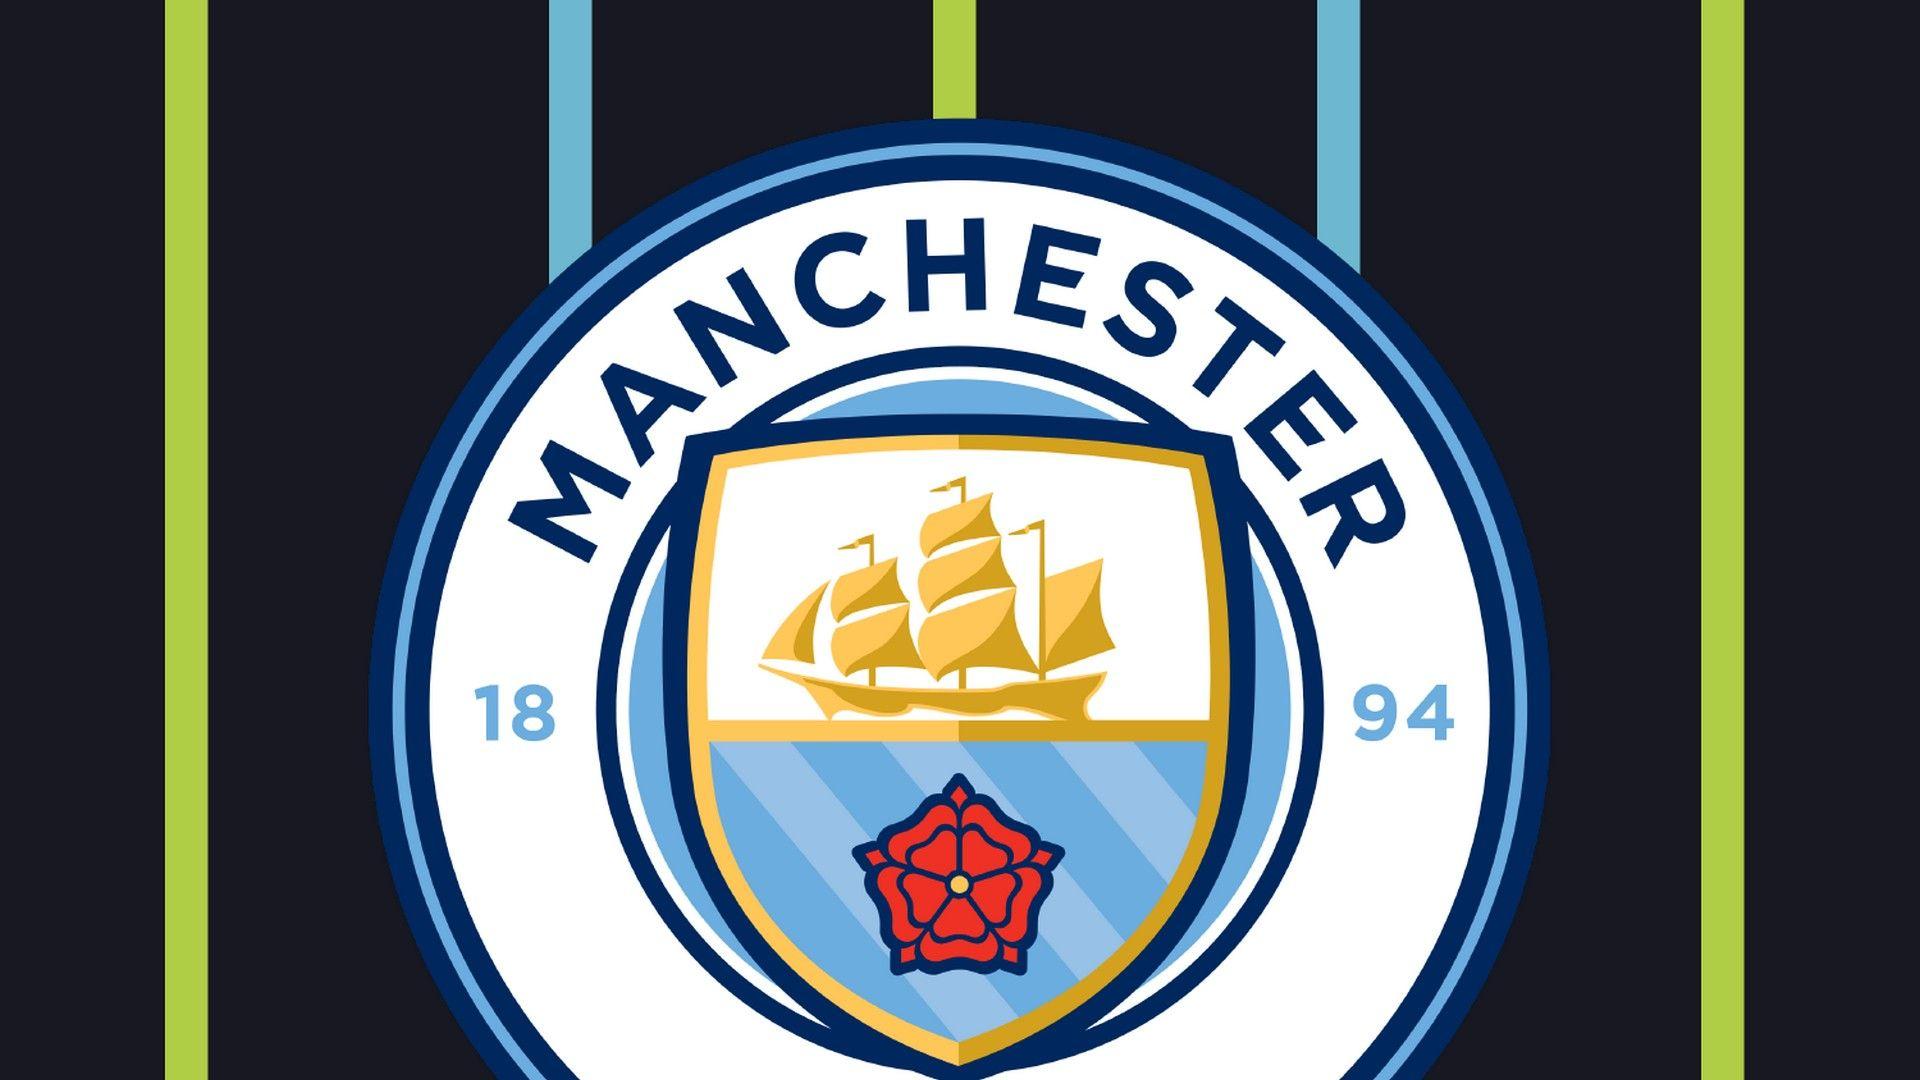 Manchester City Background HD. Best Football Wallpaper HD. Manchester city wallpaper, City wallpaper, Manchester city logo